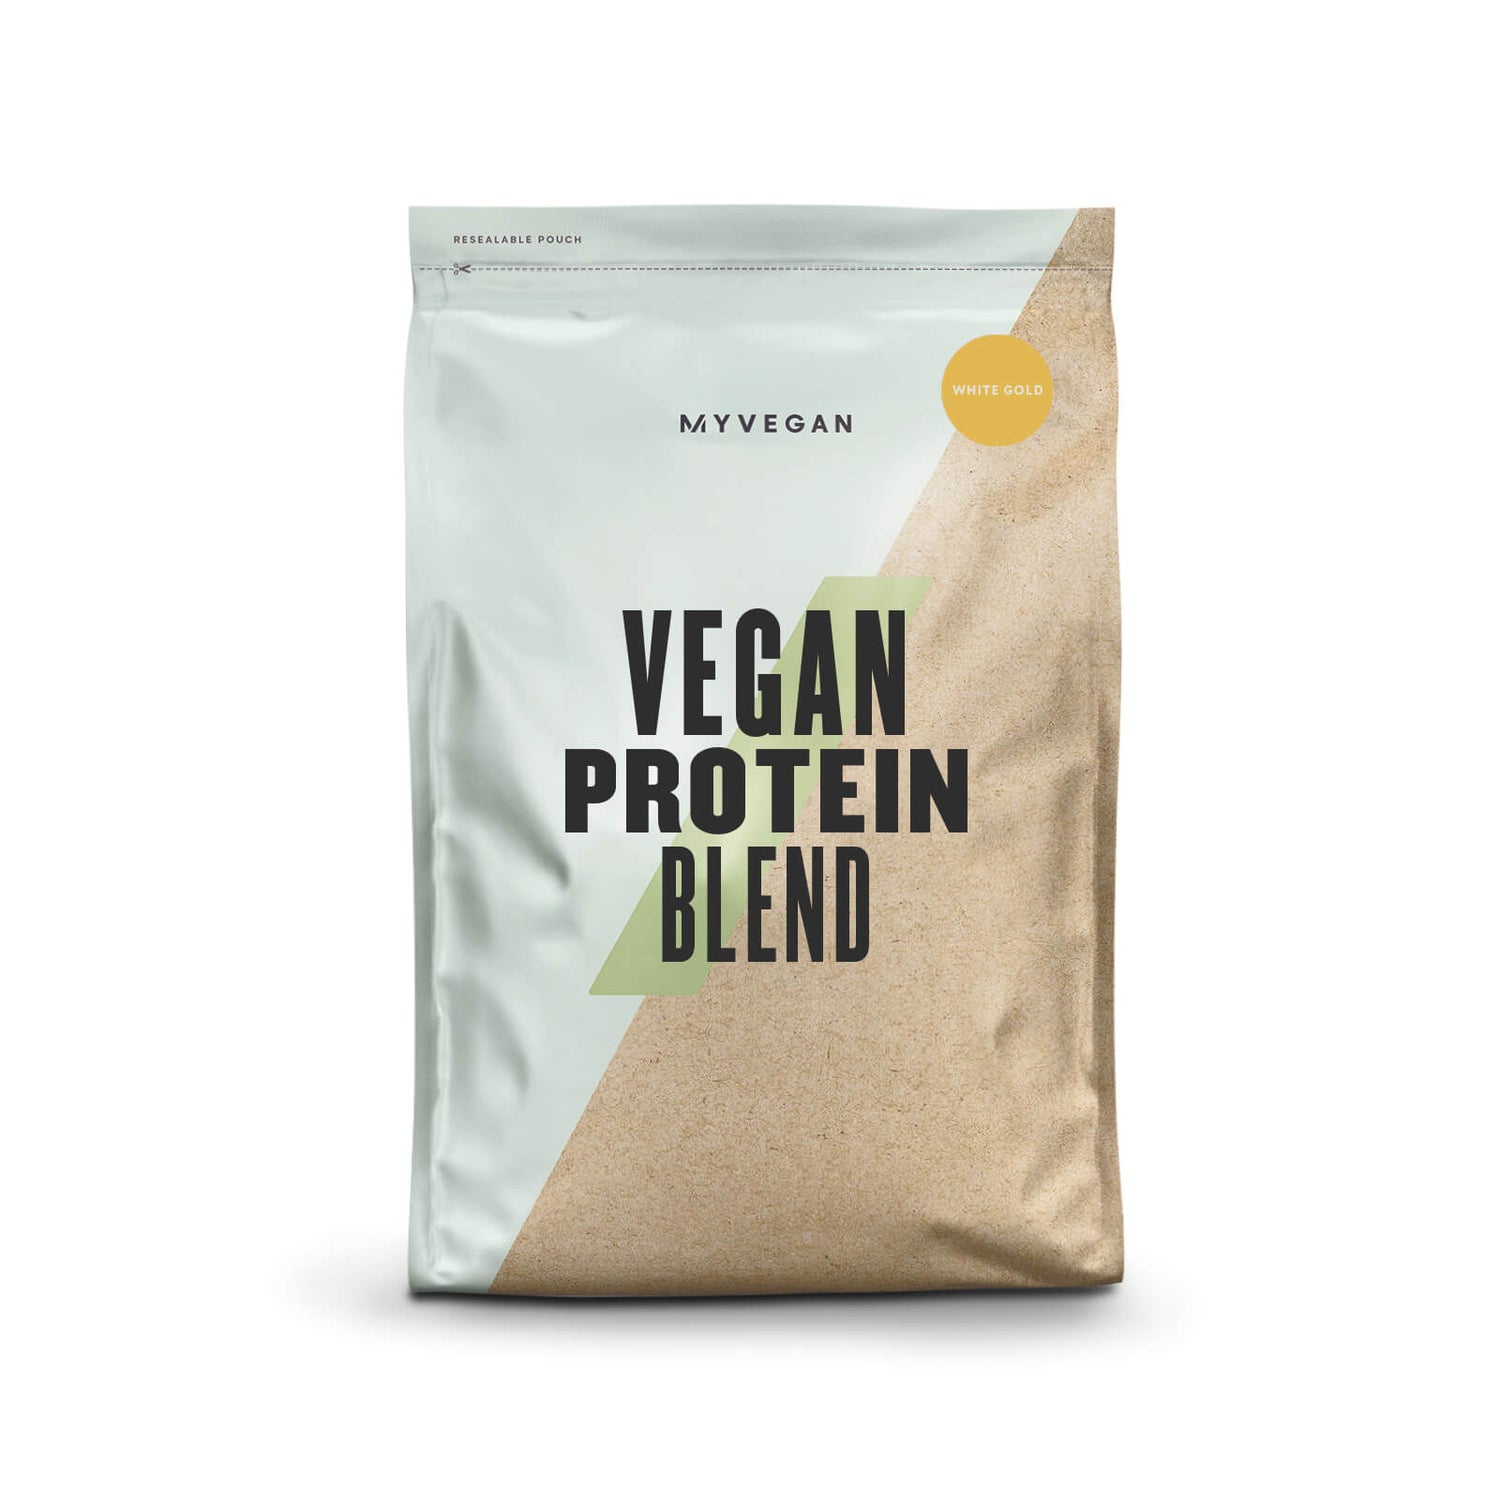 Vegan Protein Blend – White Gold flavour - 1kg - White Gold